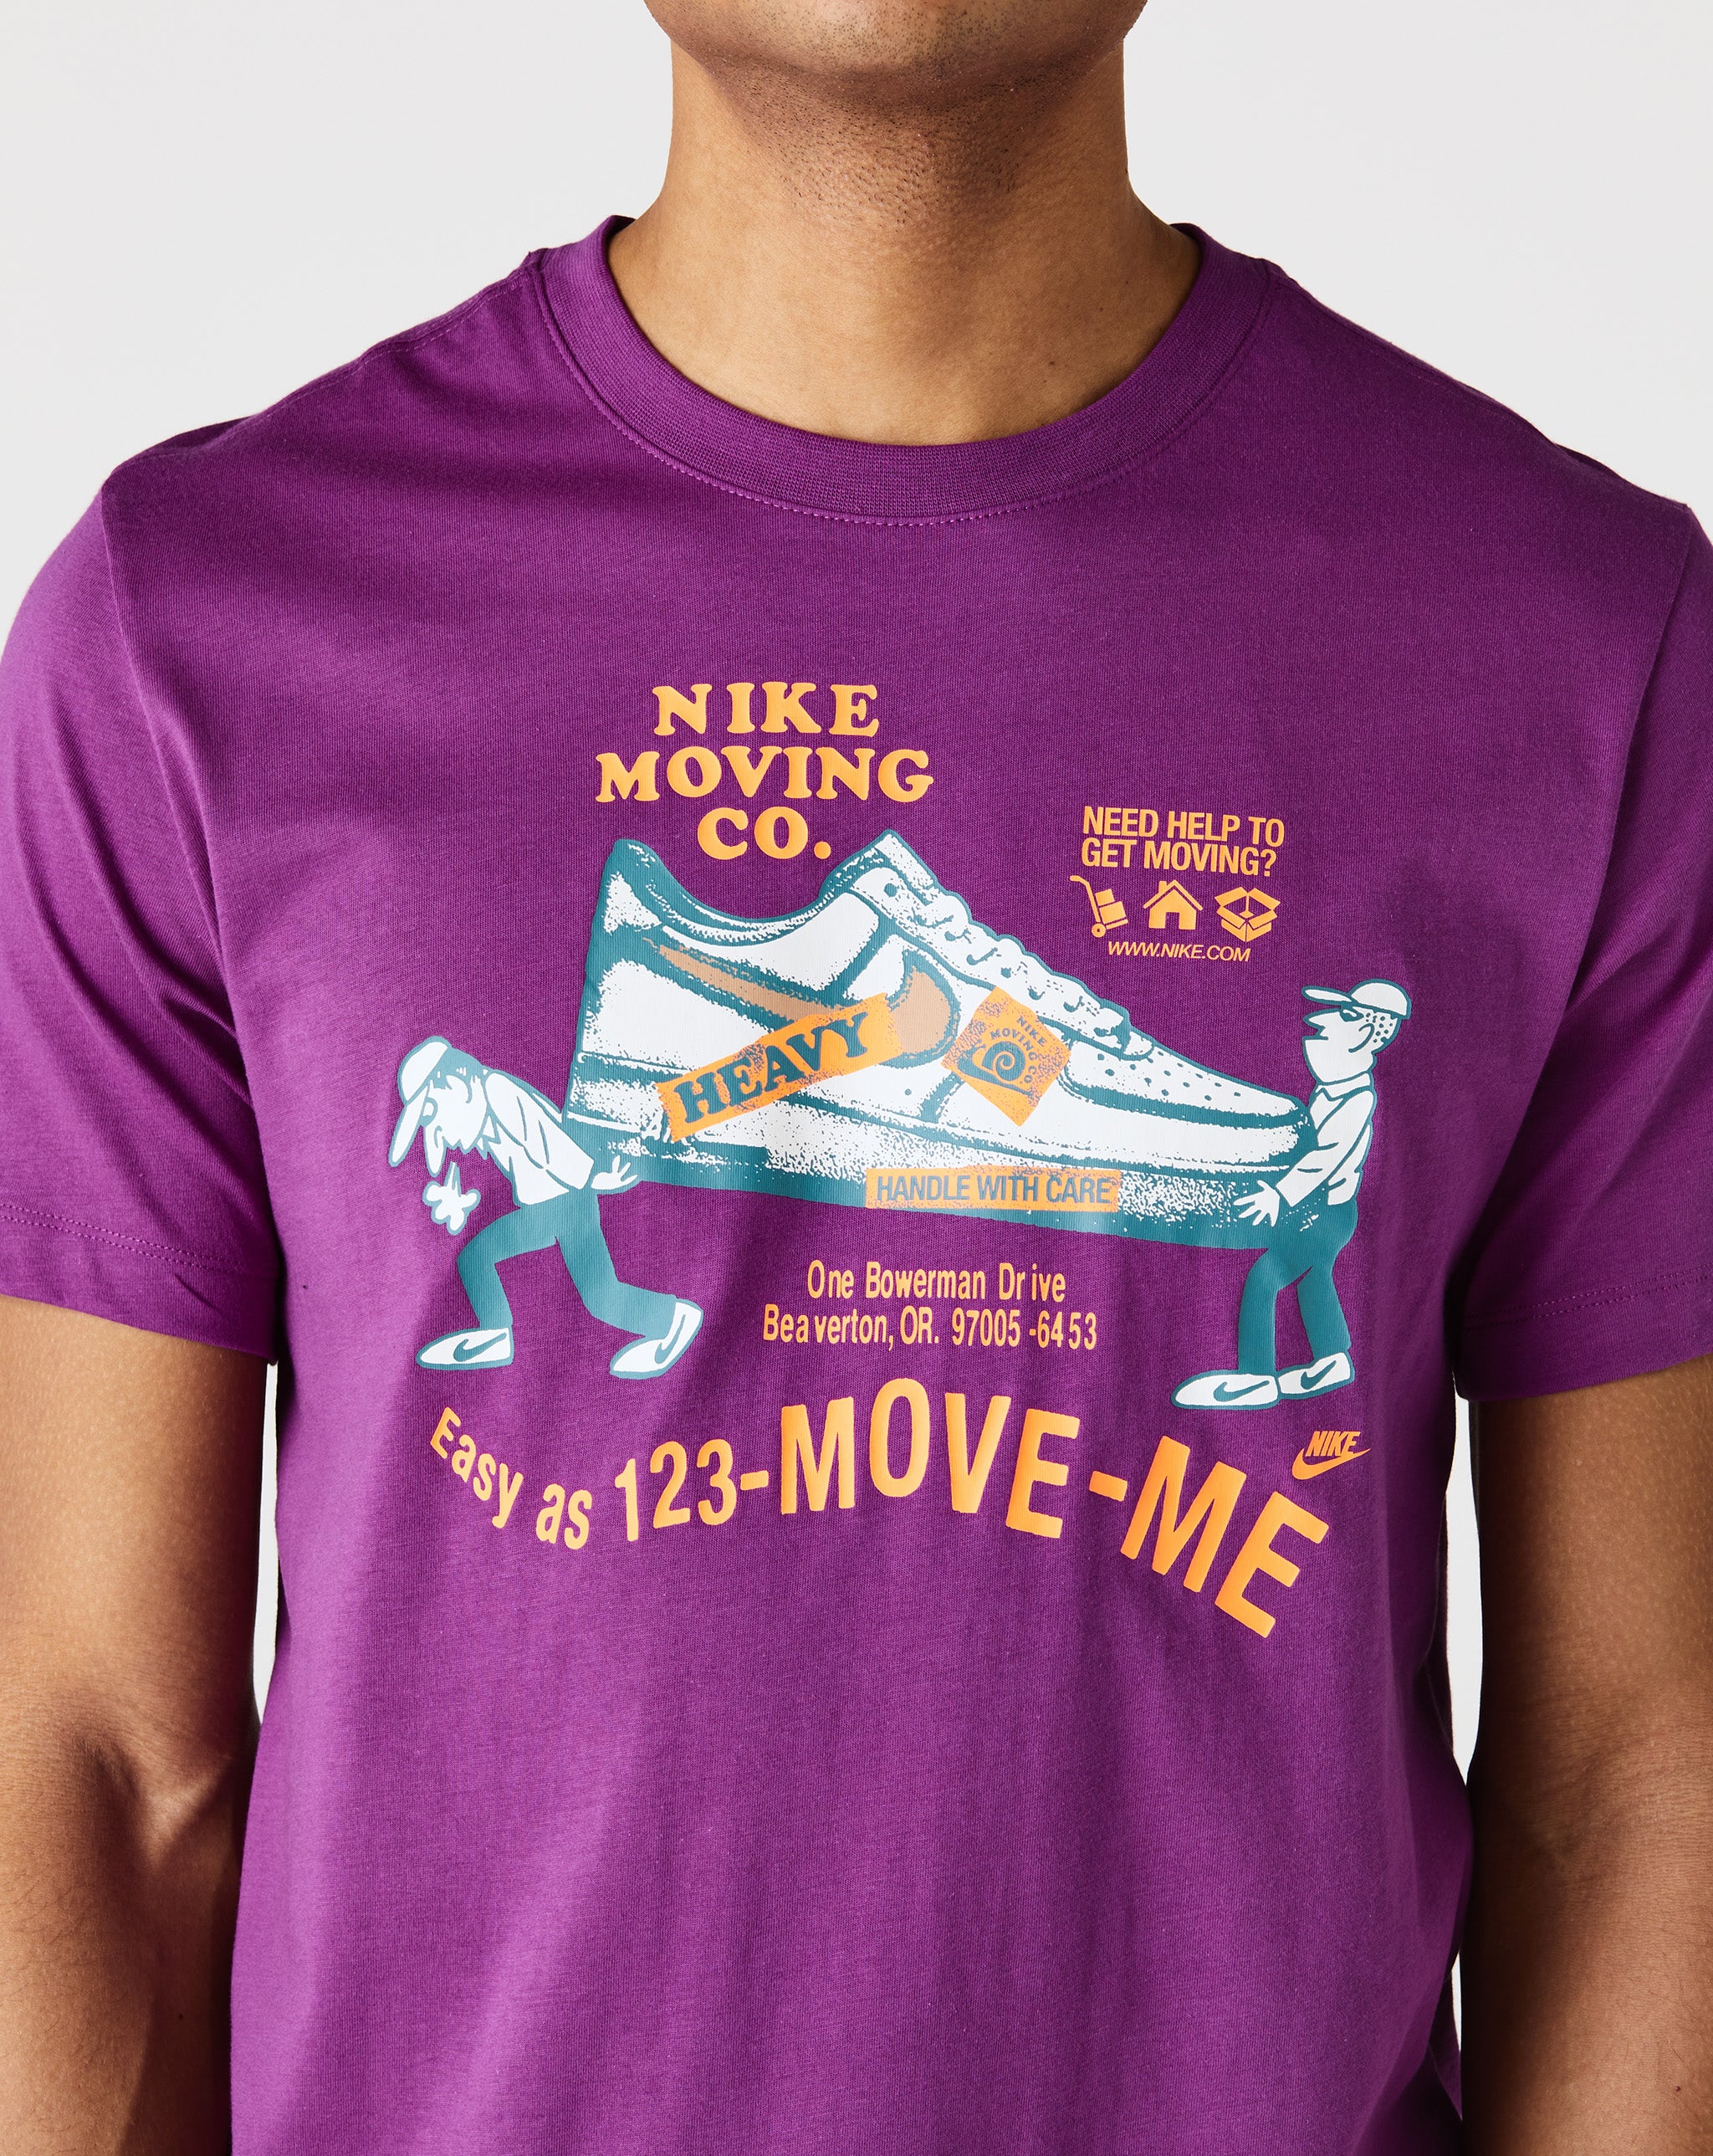 Nike Nike Moving Co. T-Shirt  - XHIBITION